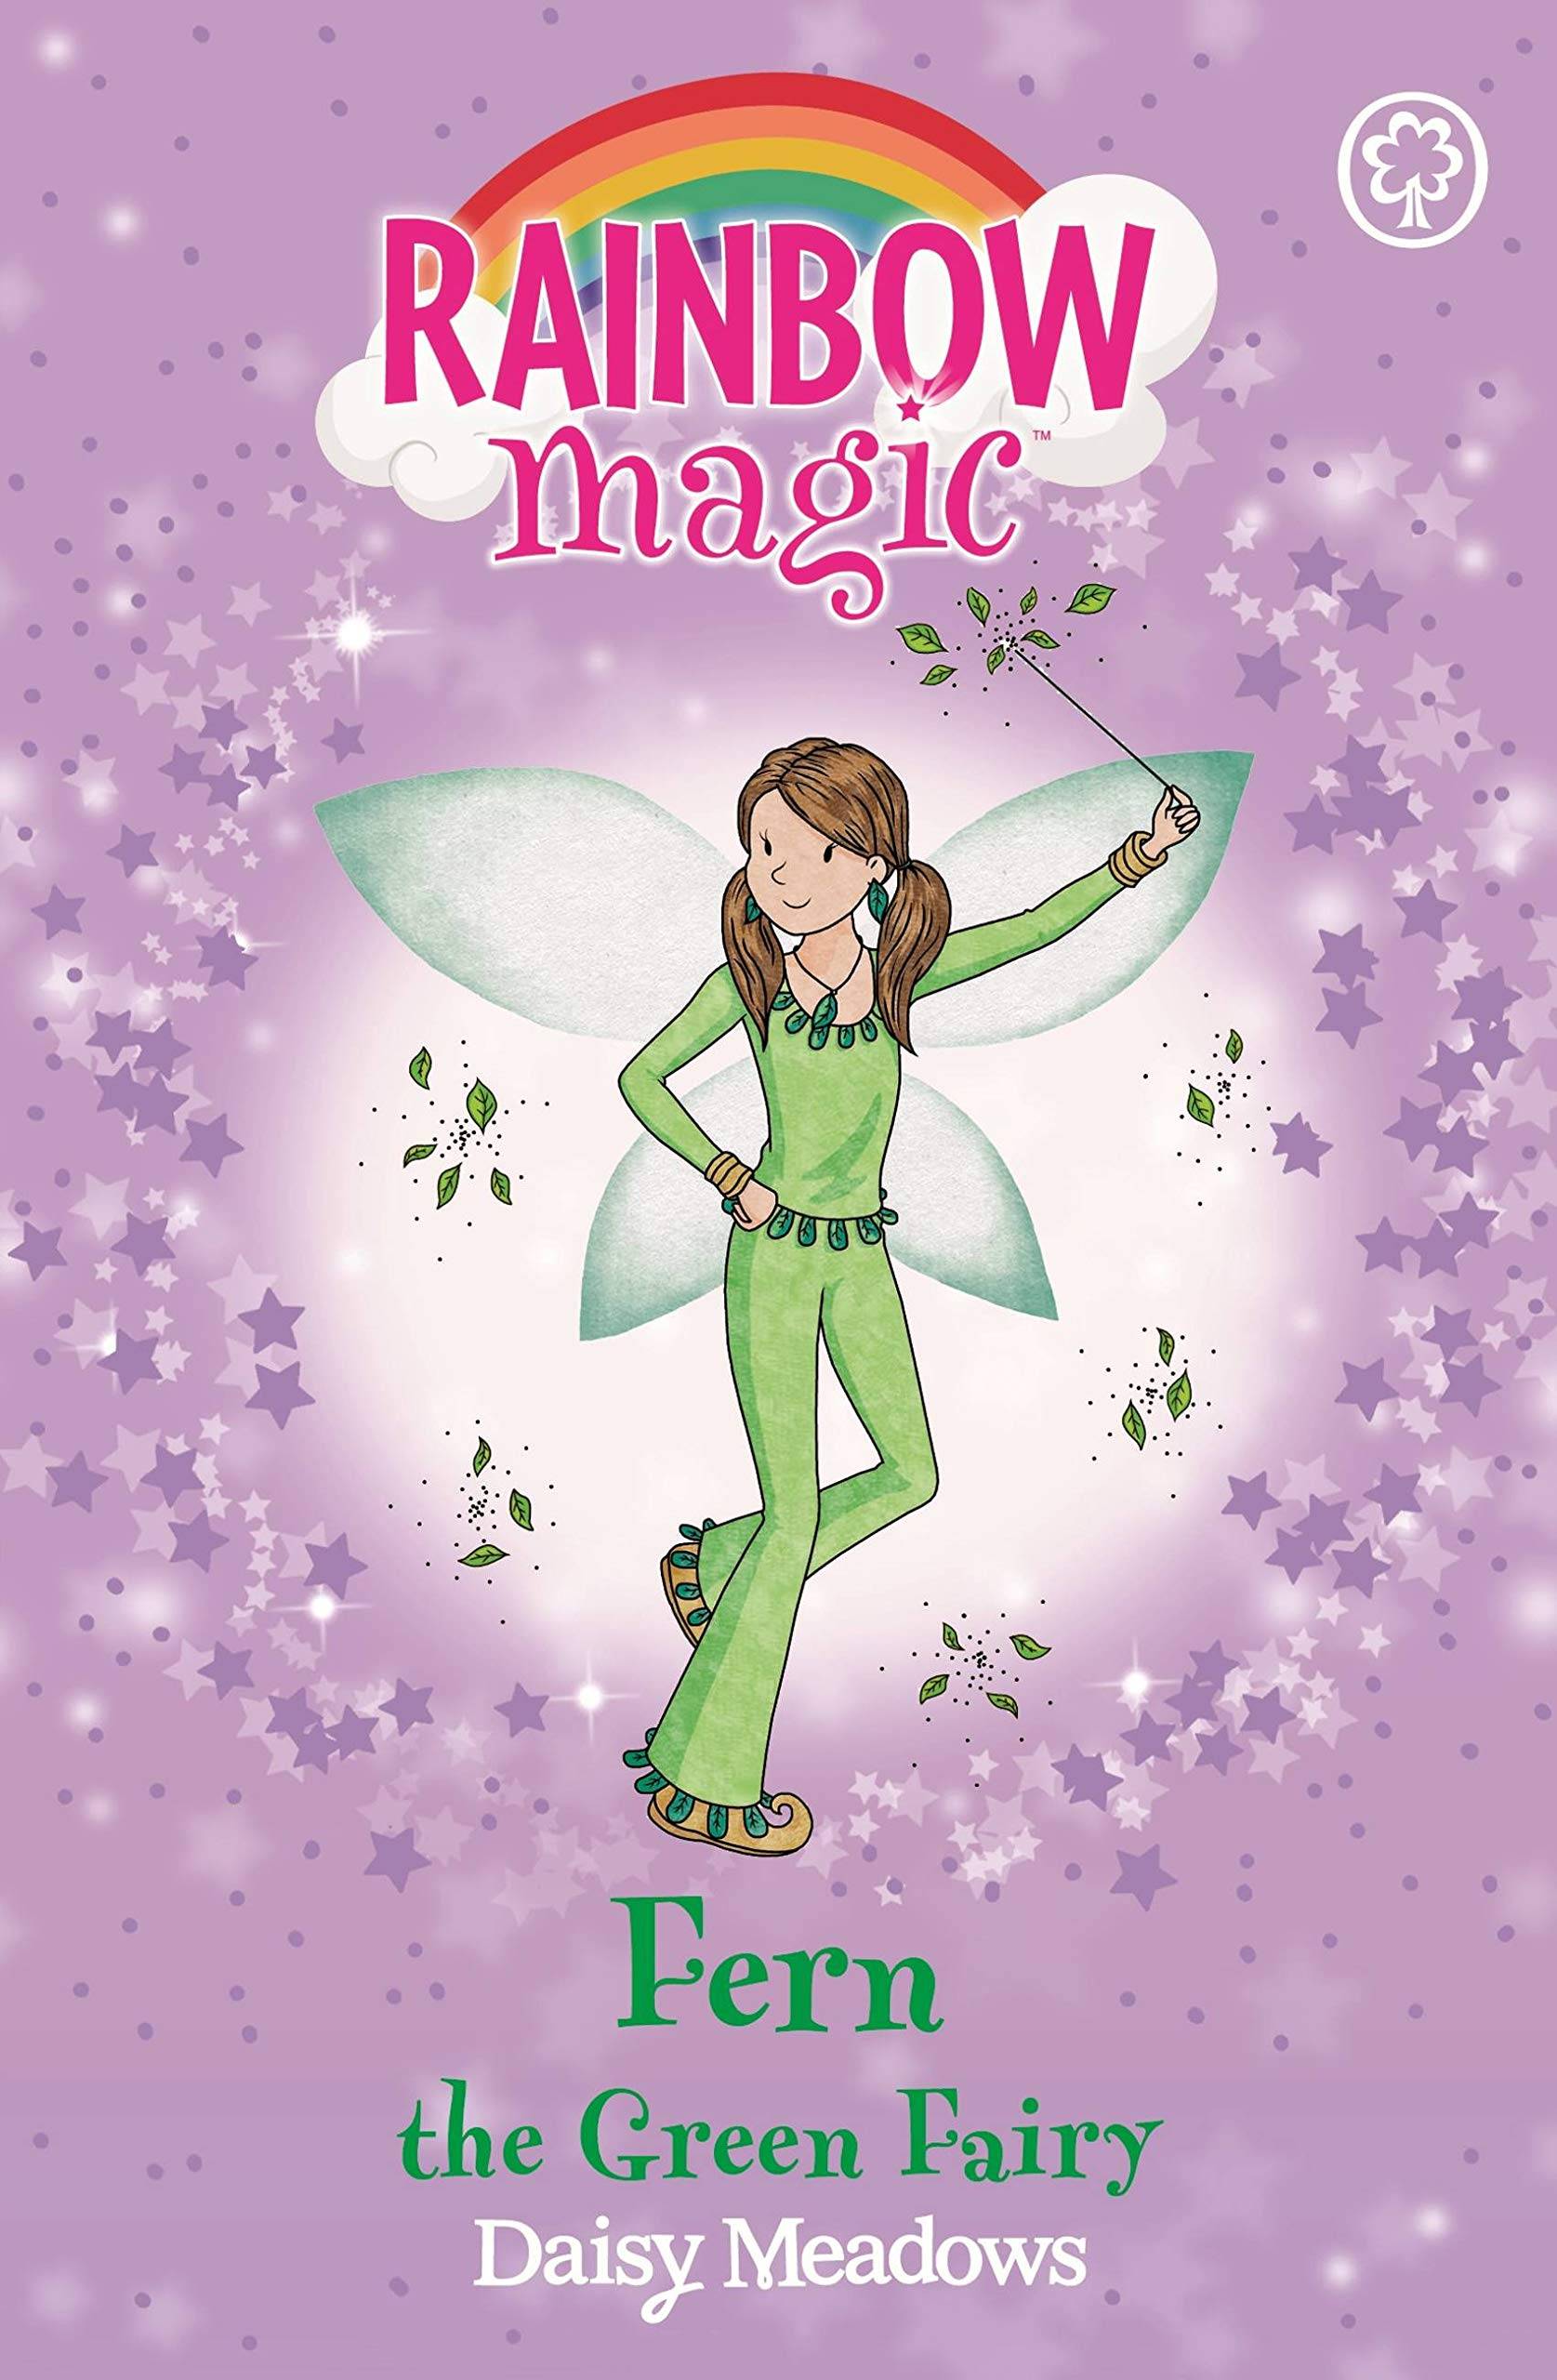 IMG : Rainbow Magic Fern the green Fairy